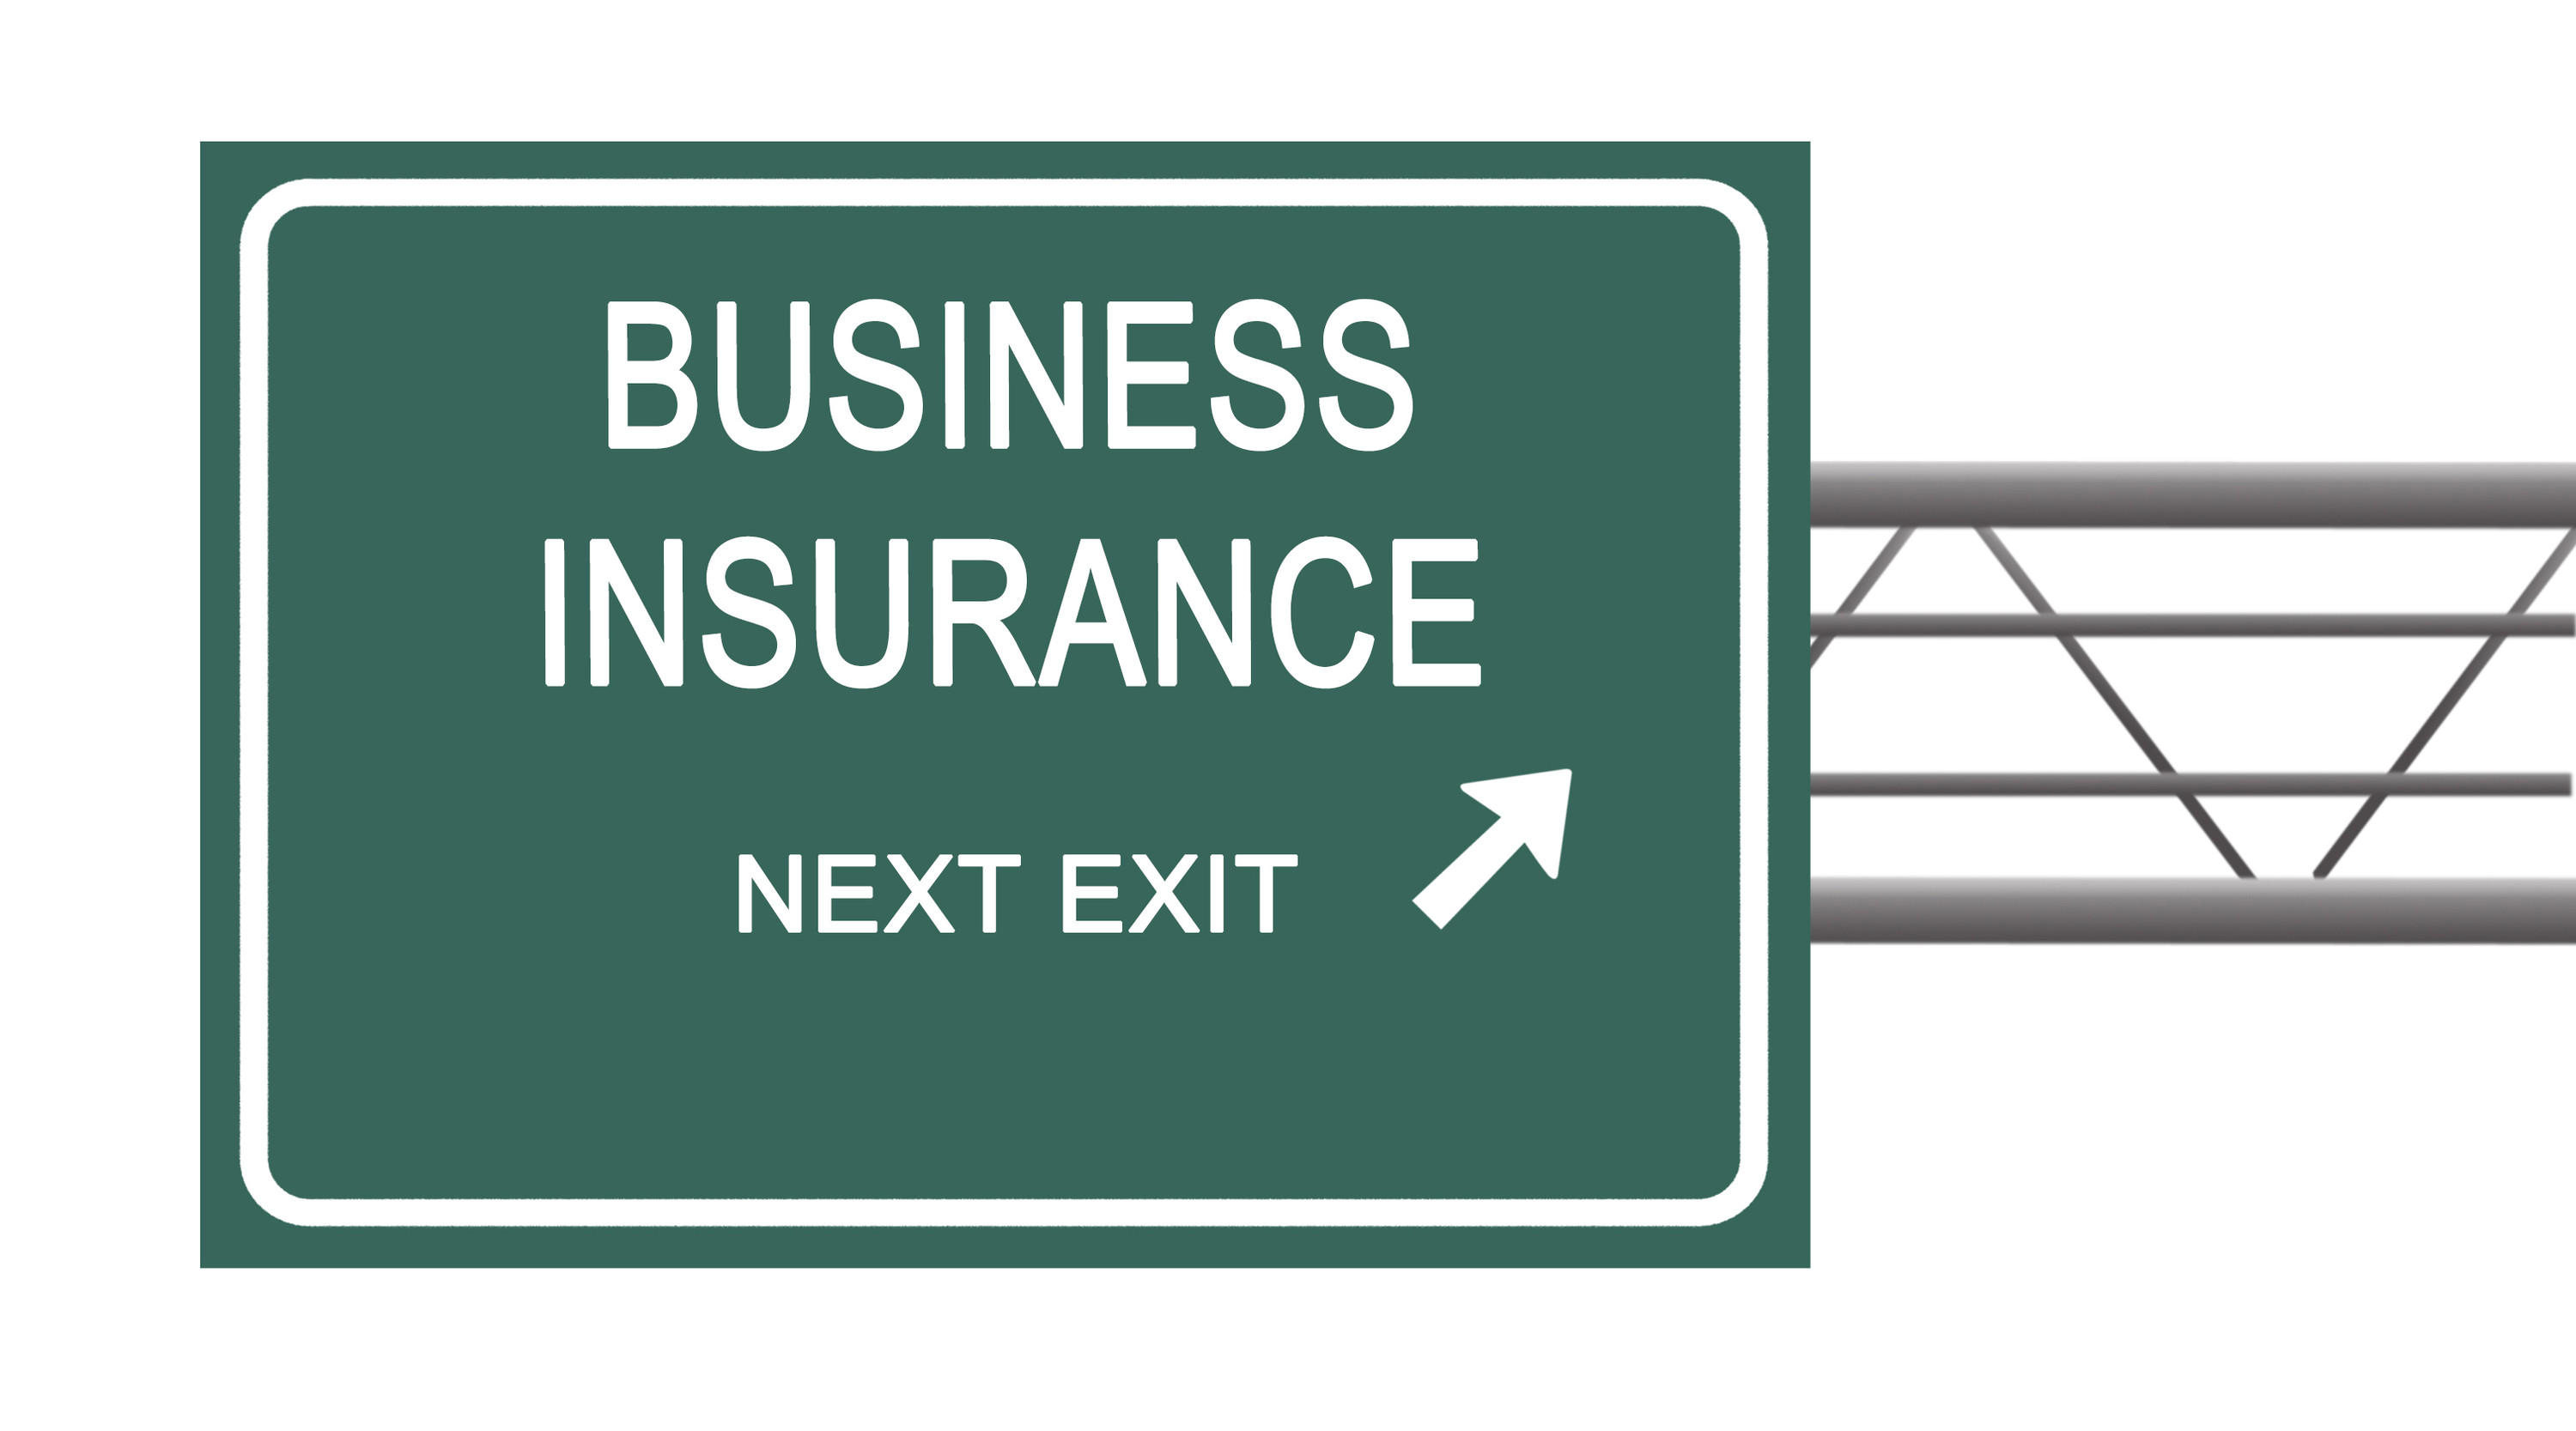 Business Insurance Next Exit